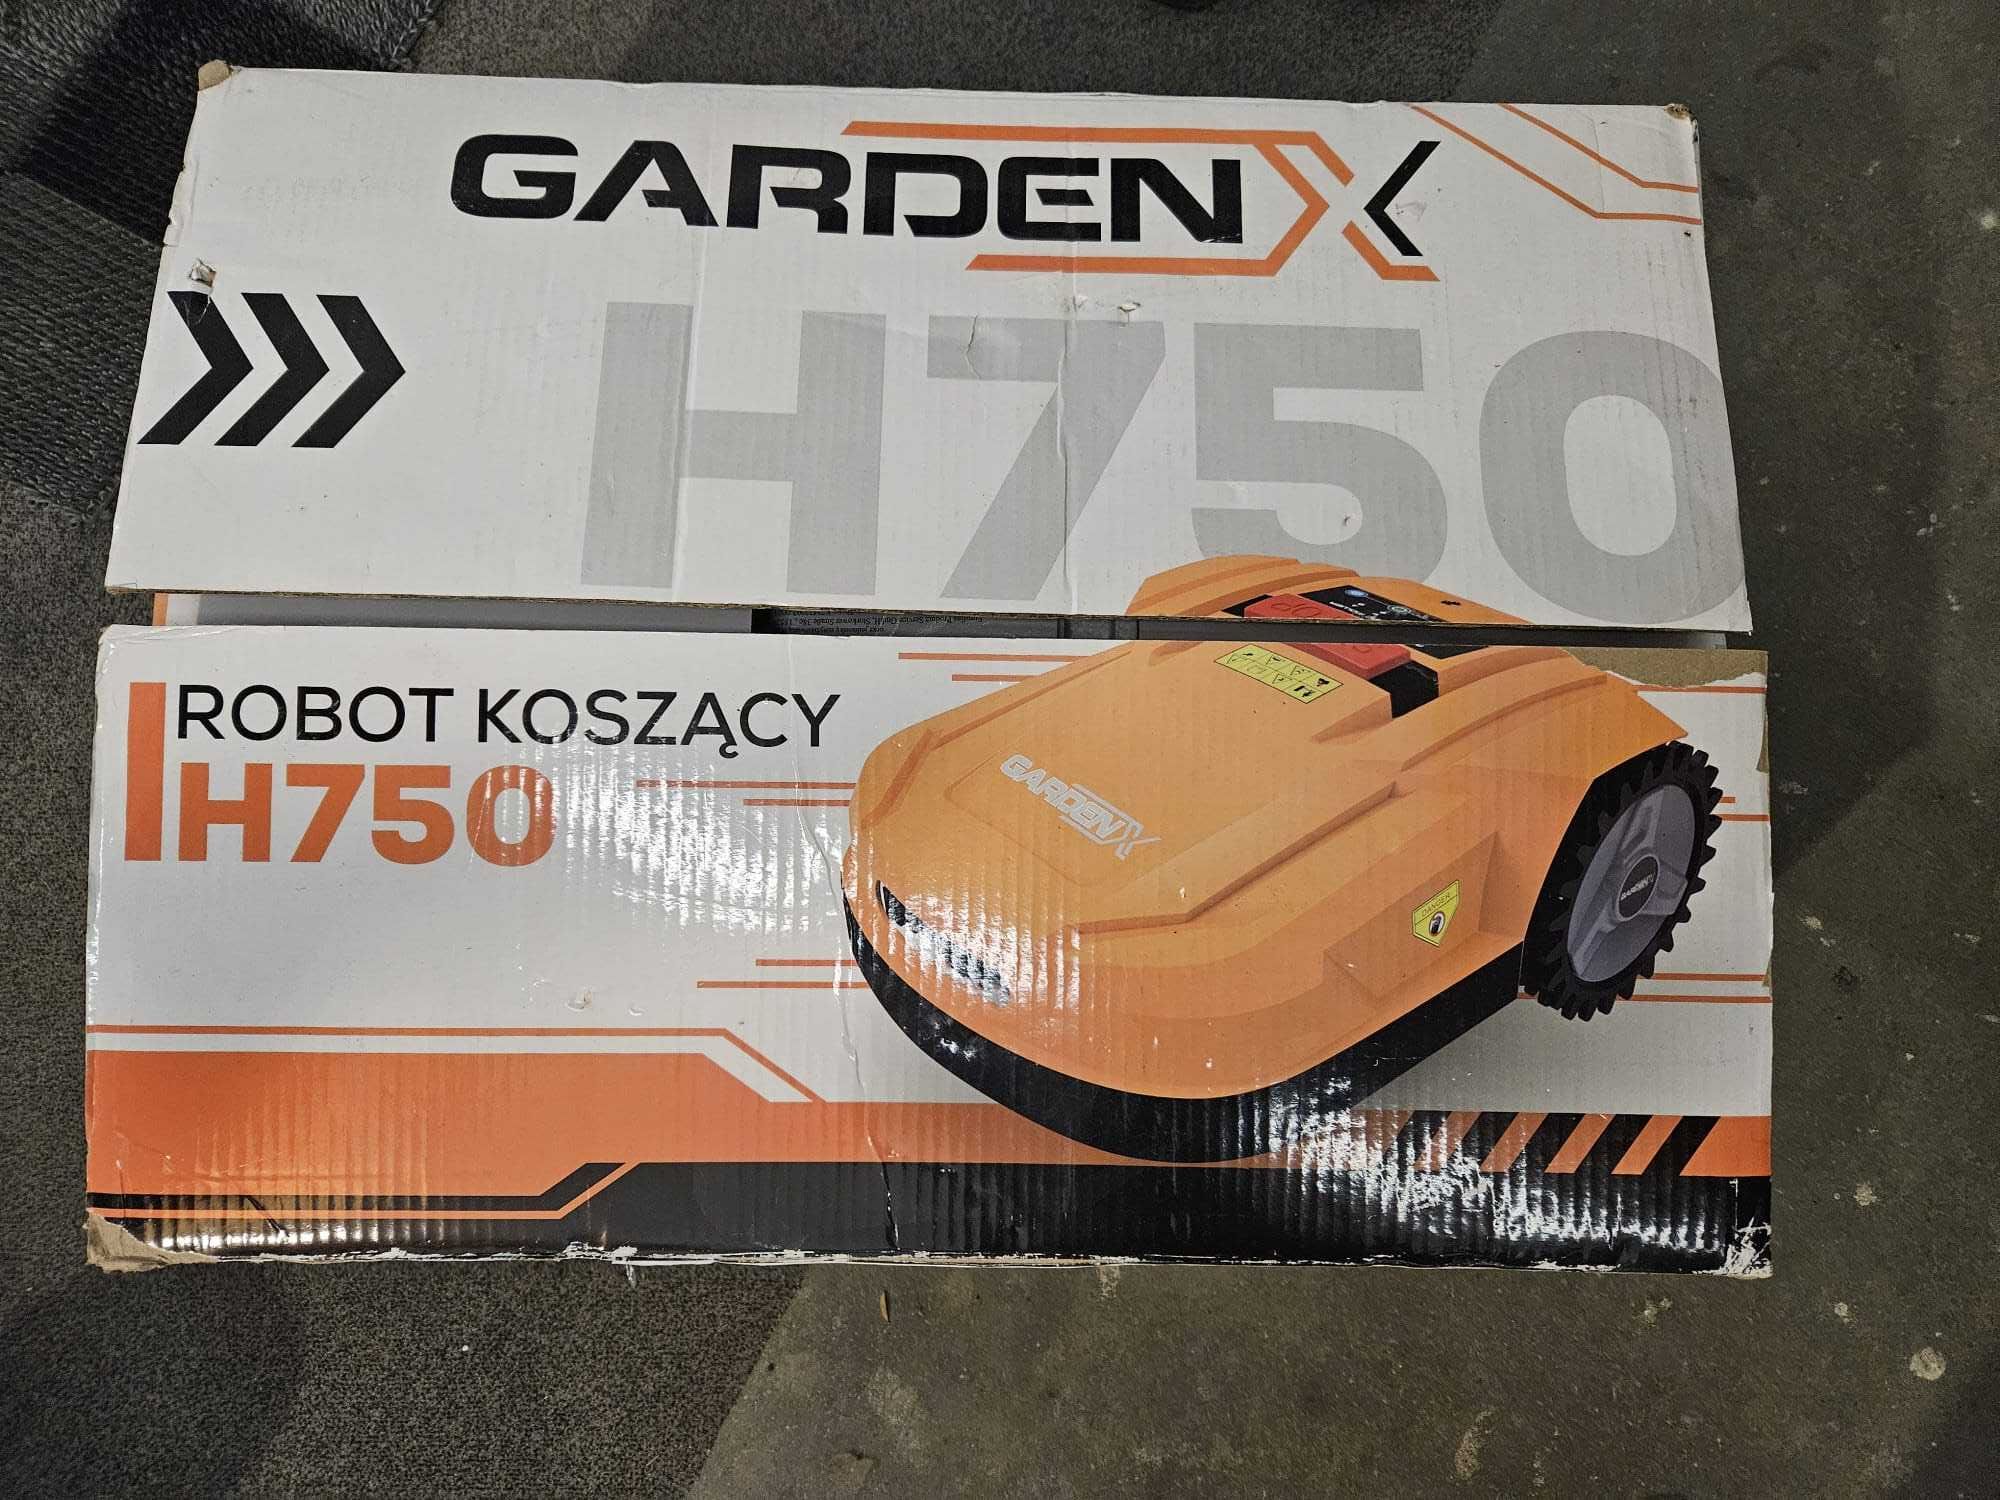 Robot koszący Gardenx H750 750m2